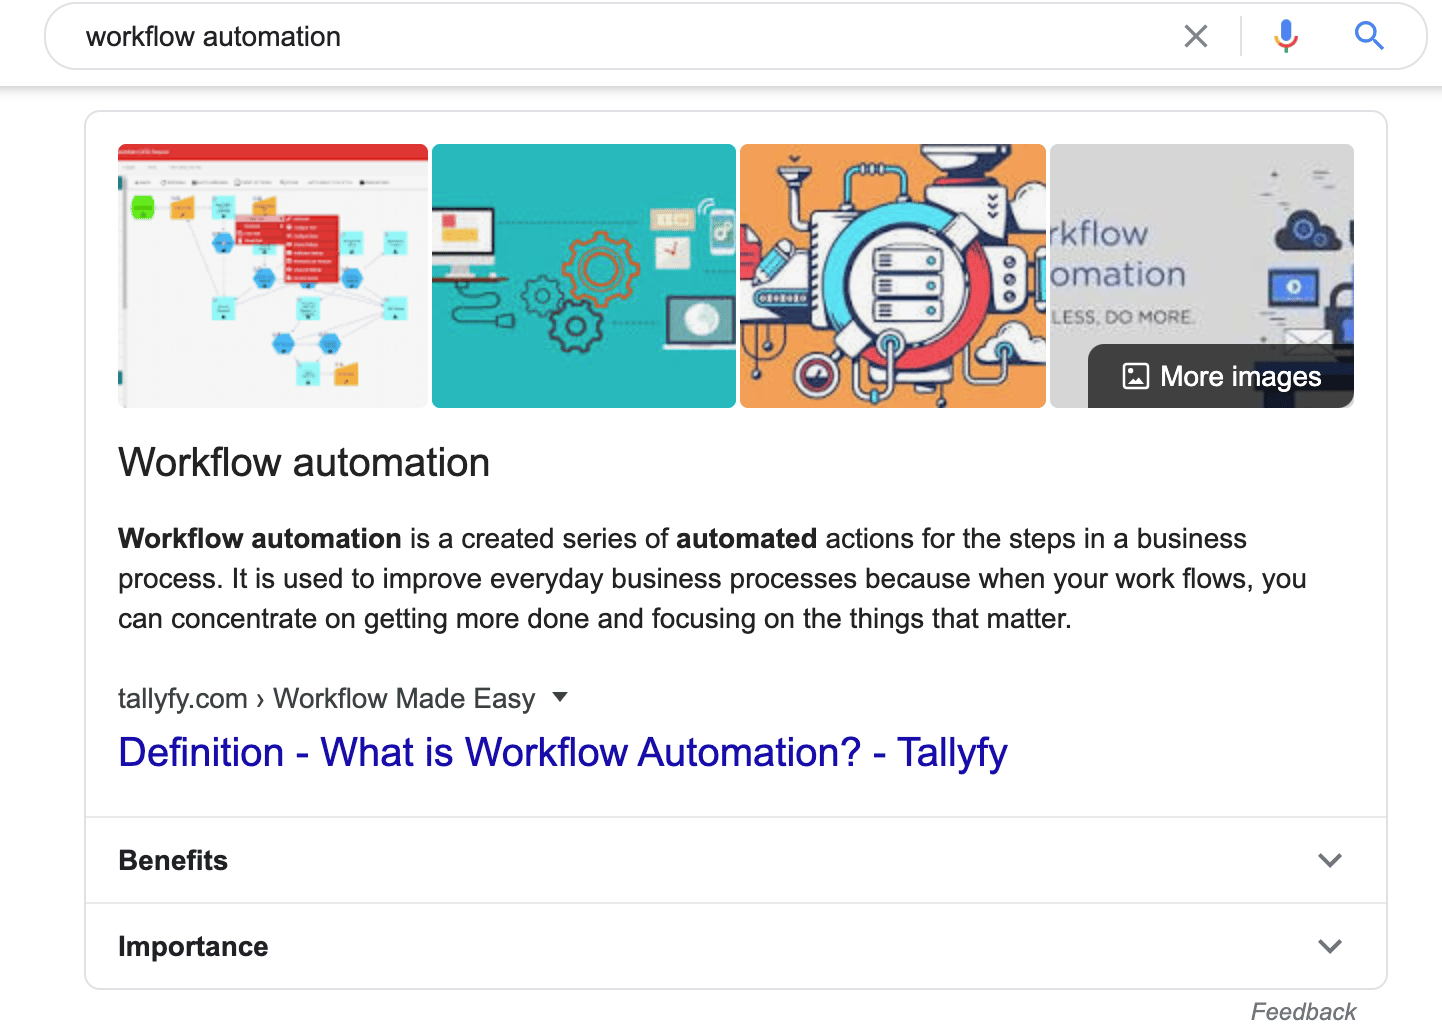 Workflow automation ranking #1